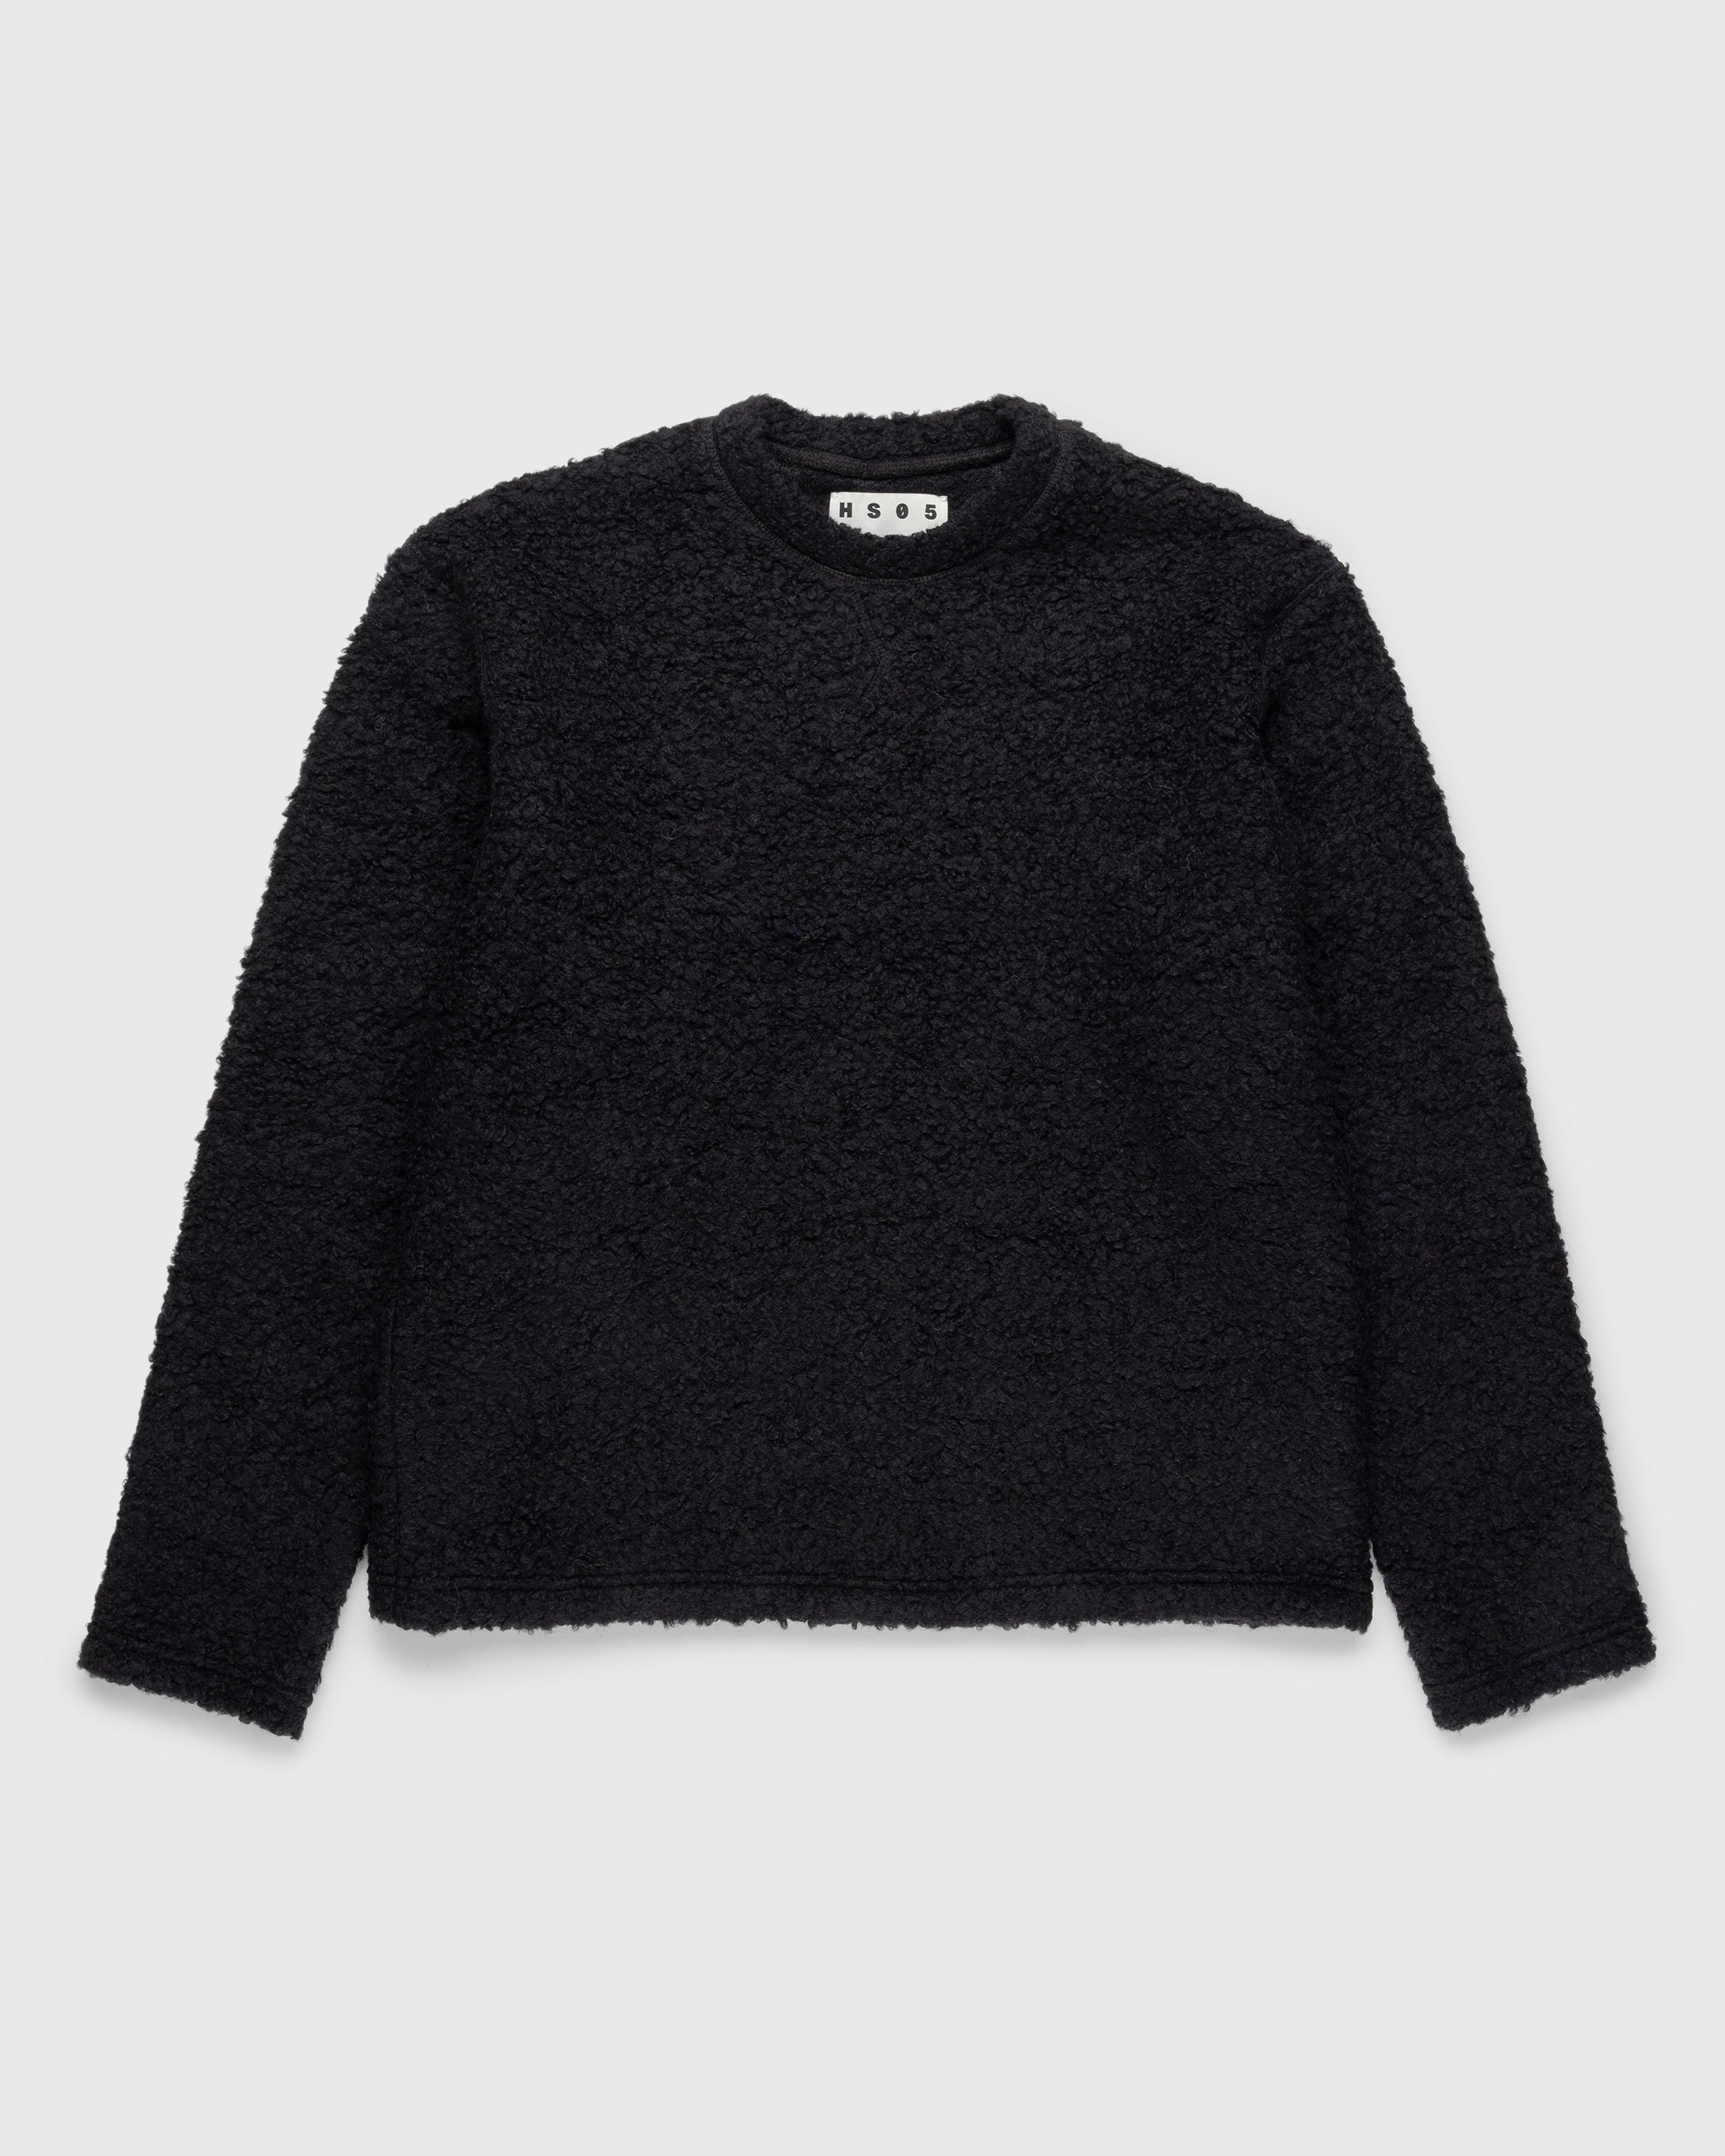 Highsnobiety HS05 - Wool Blend Inlaid Knit Crew Black - Clothing - Black - Image 1